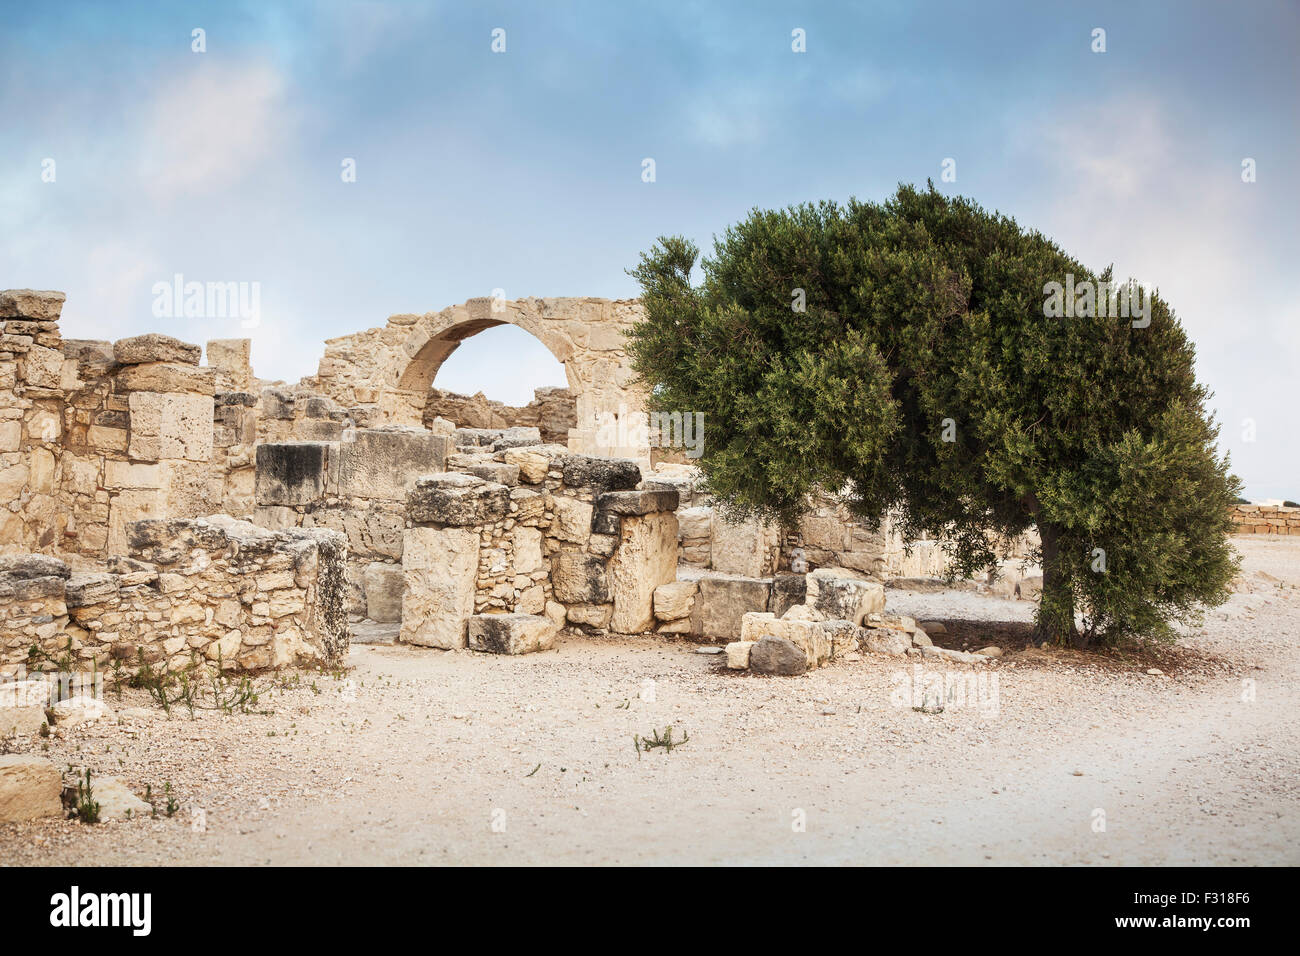 Distrikt Limassol, Kourion, Zypern - 18. Juli 2015: Antike Ruinen Ausgrabungsstätte Kourion Stockfoto